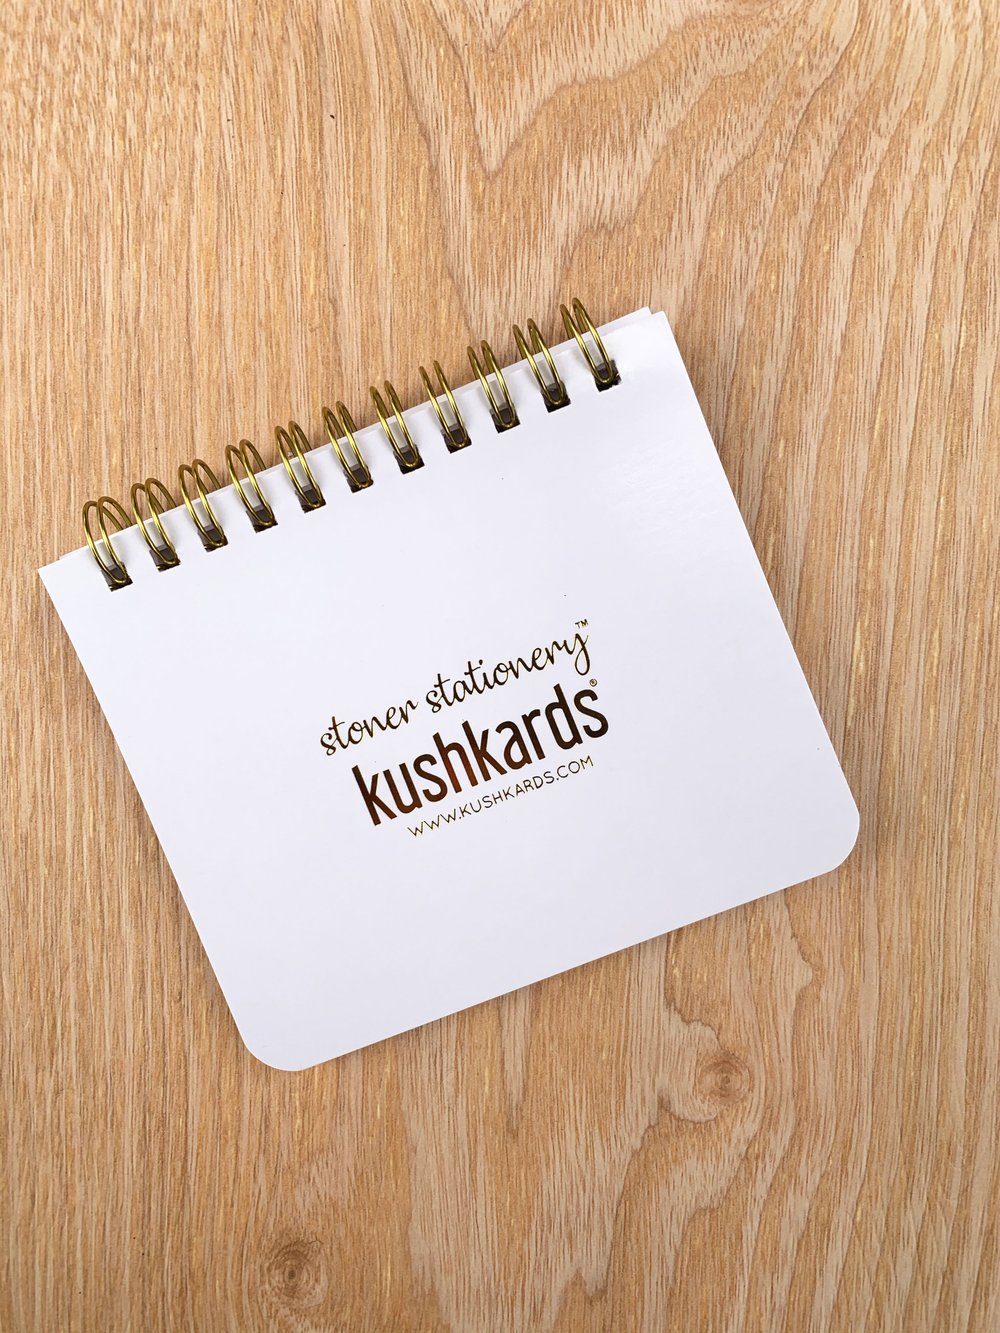 kushkards gold polka dot pot leaf notebook